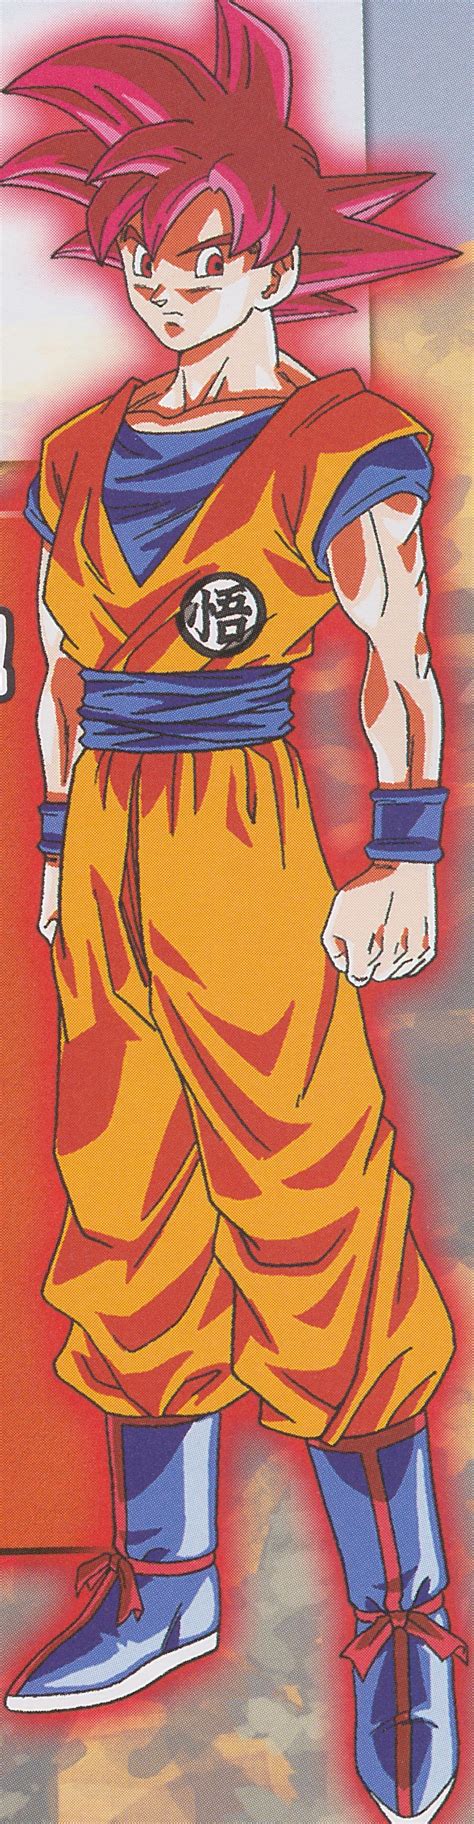 Super saiyan god = 20,000x base. Goku History: Most Powerfull Technique